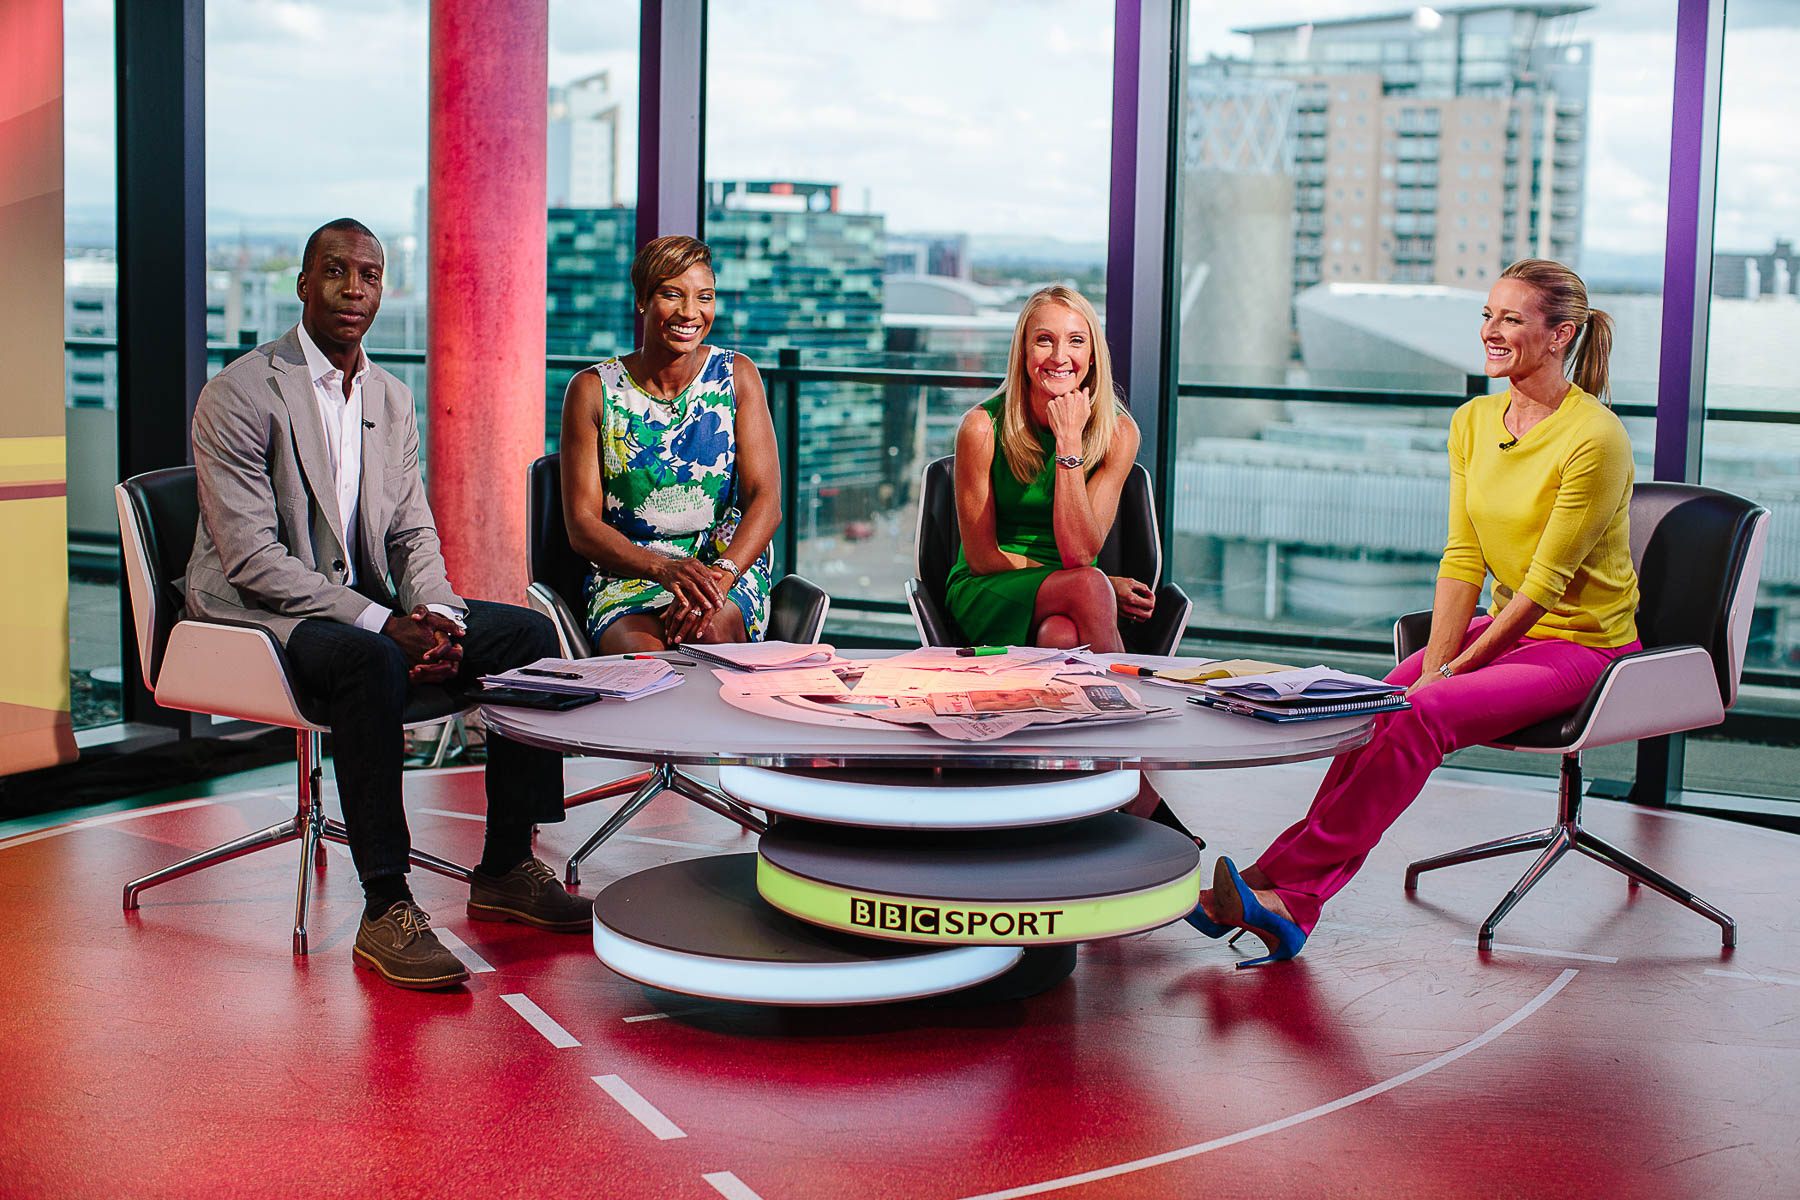 bbc sports team on tv studio set